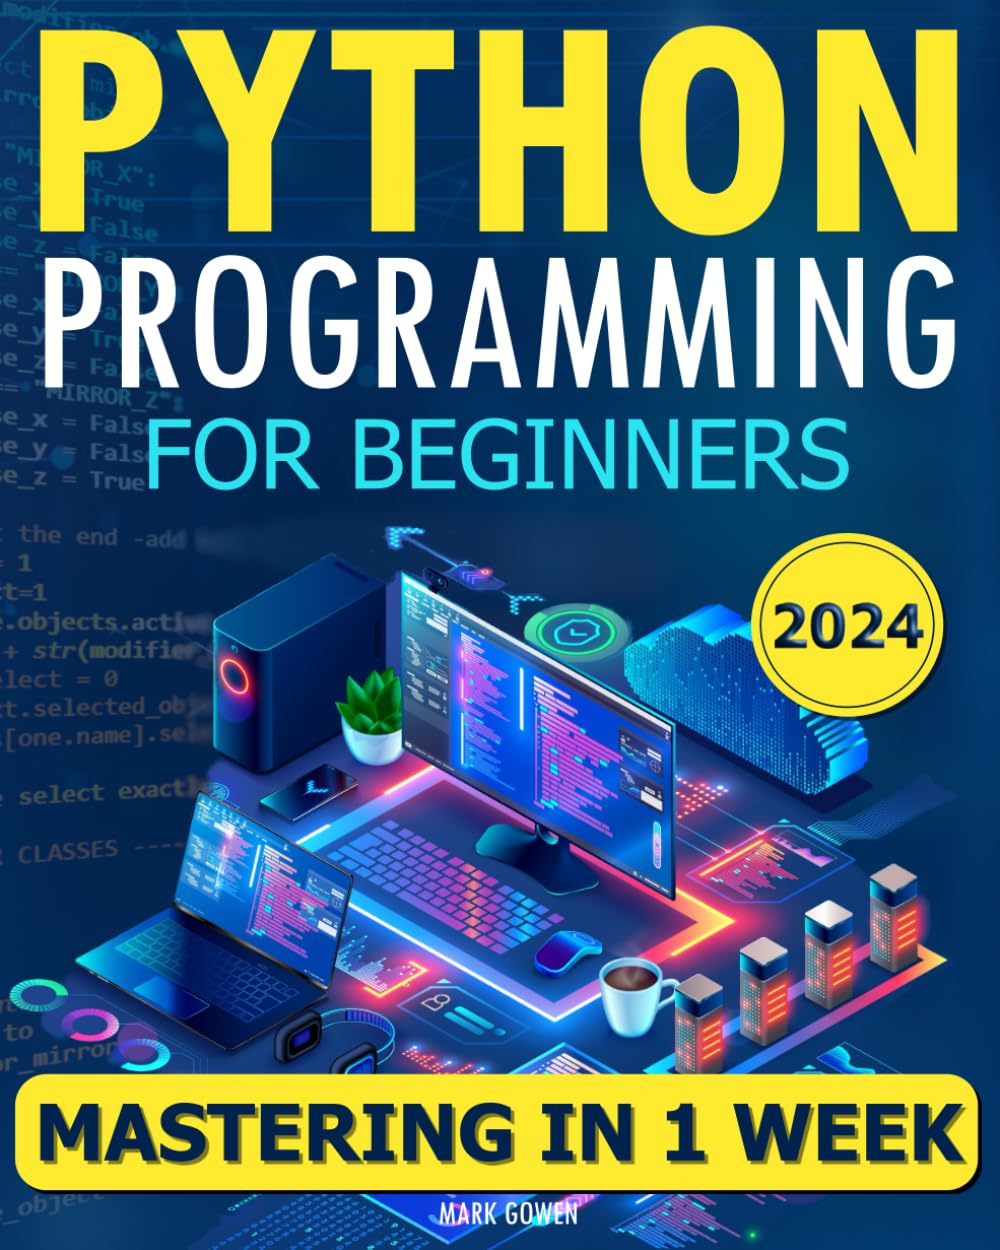 “Python Programming for Beginners”